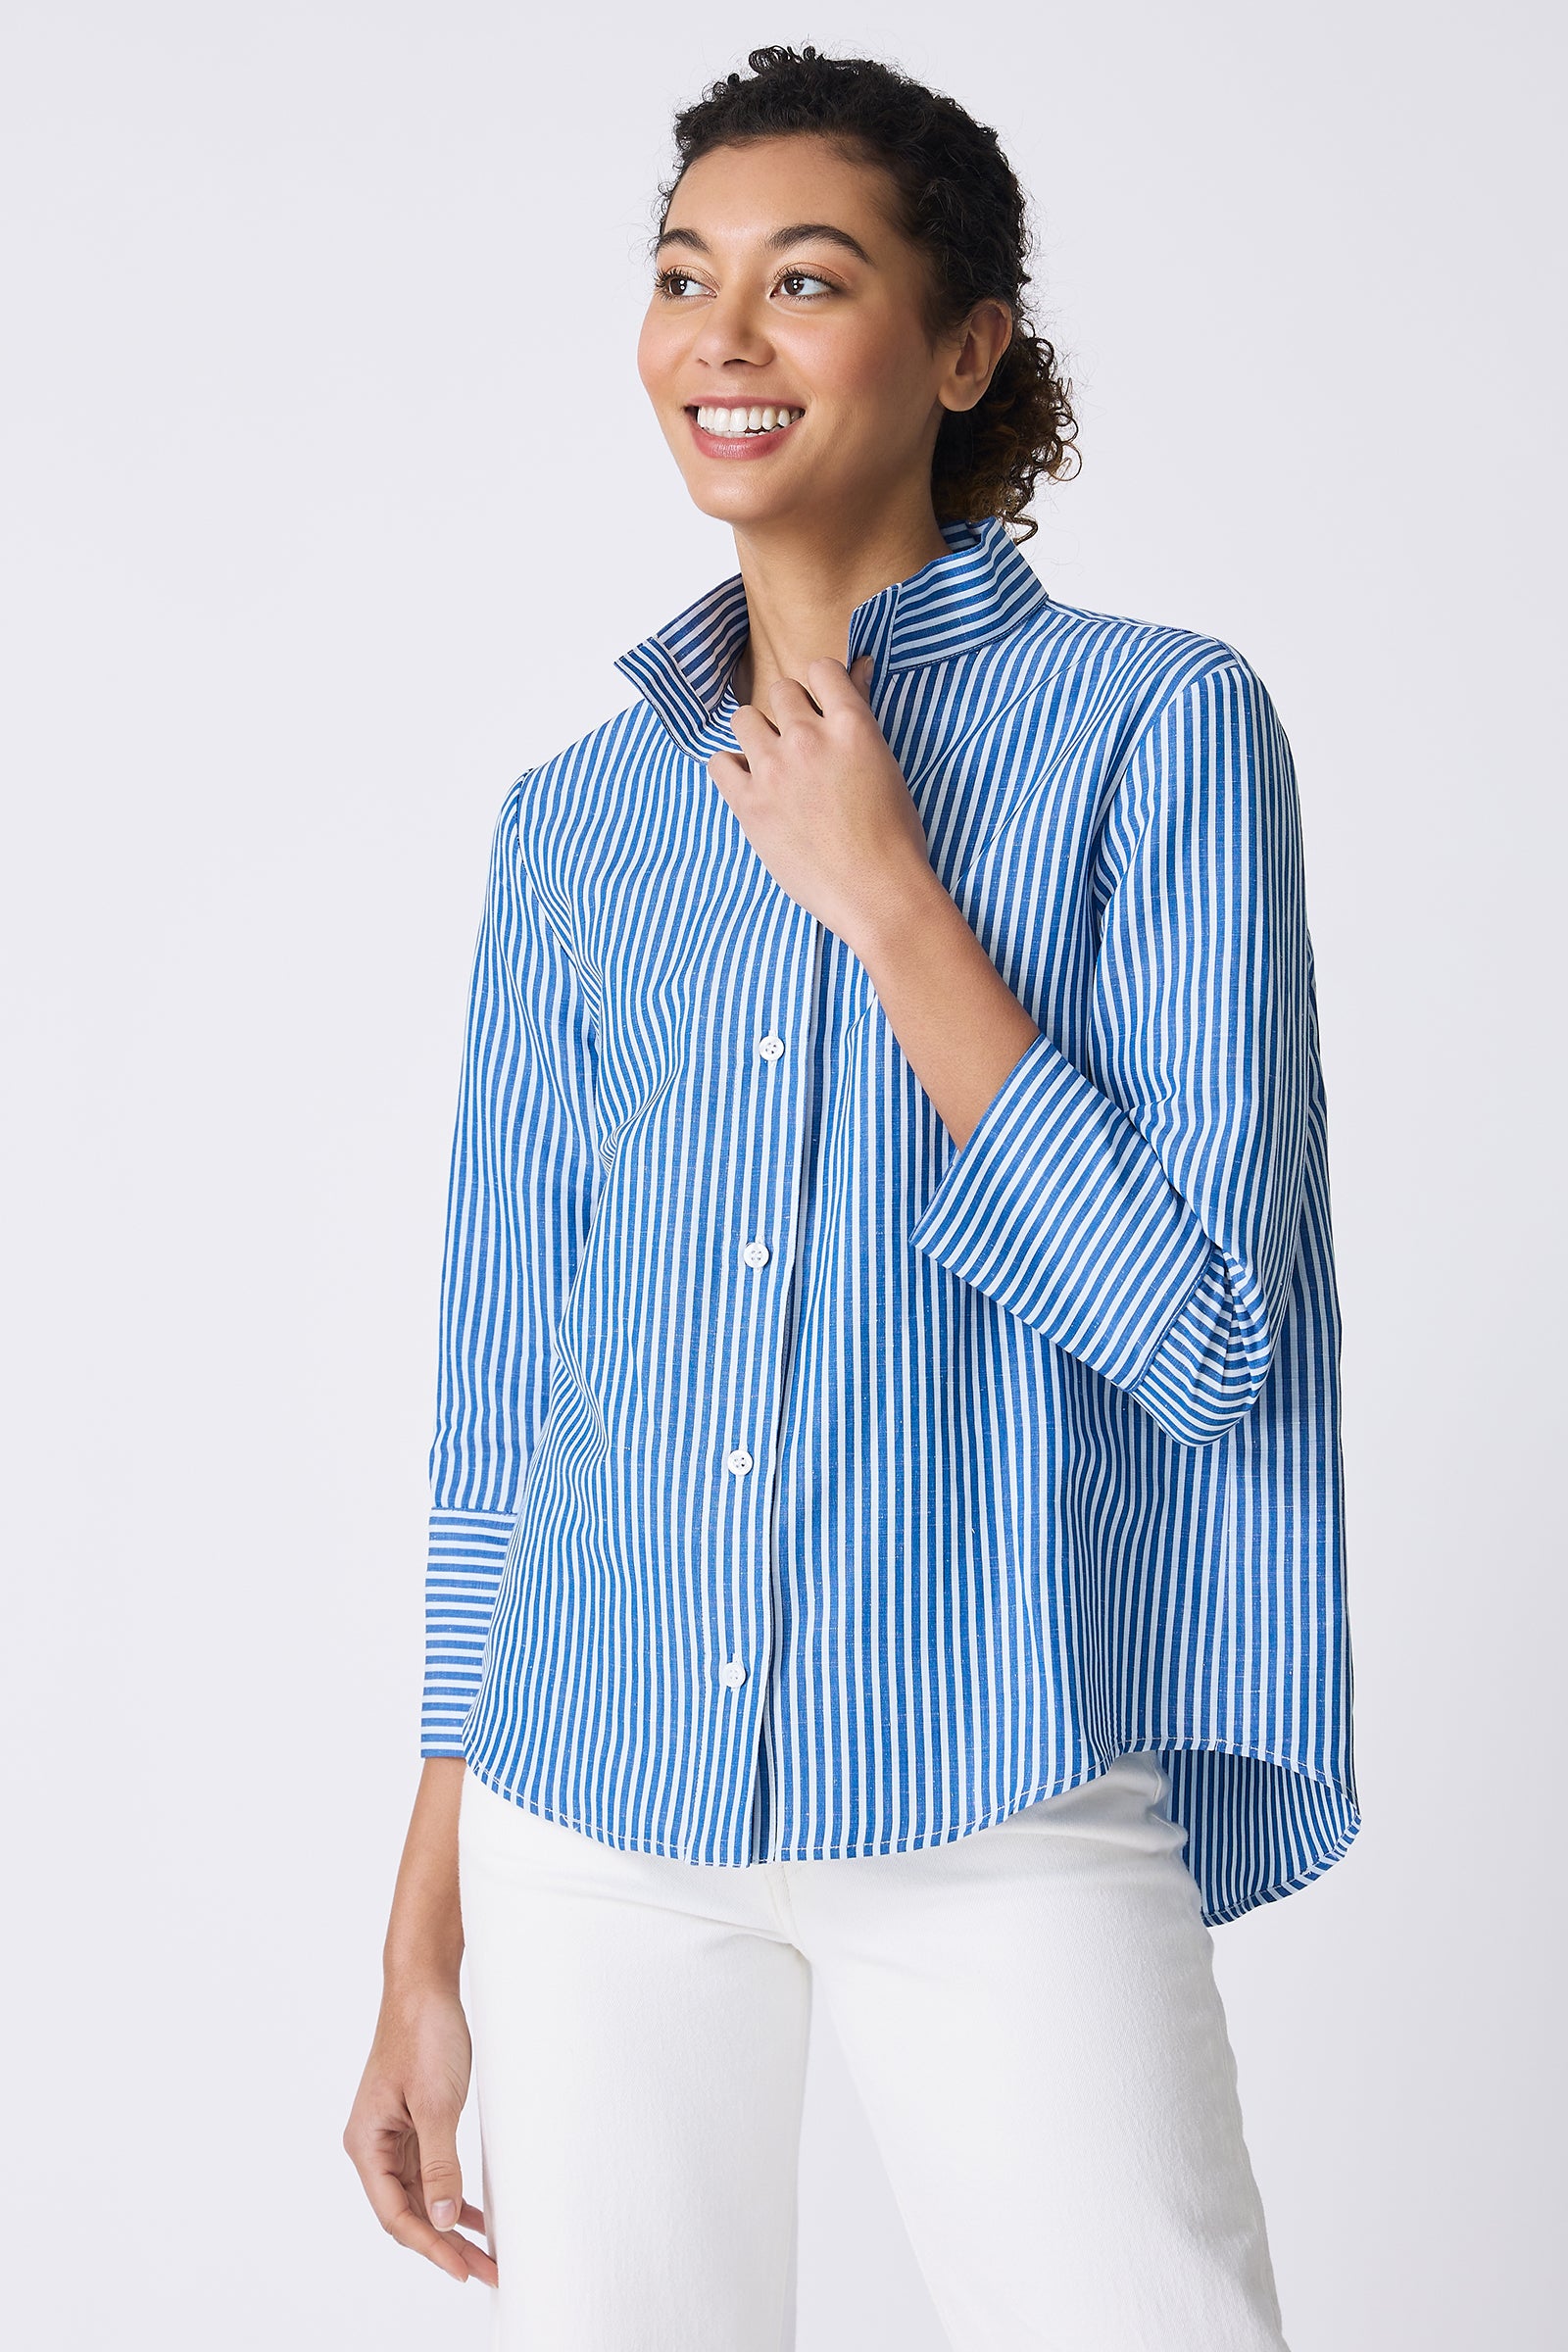 Kal Rieman Greta Placket Front Shirt in Cabana Stripe Blue on model smiling front view